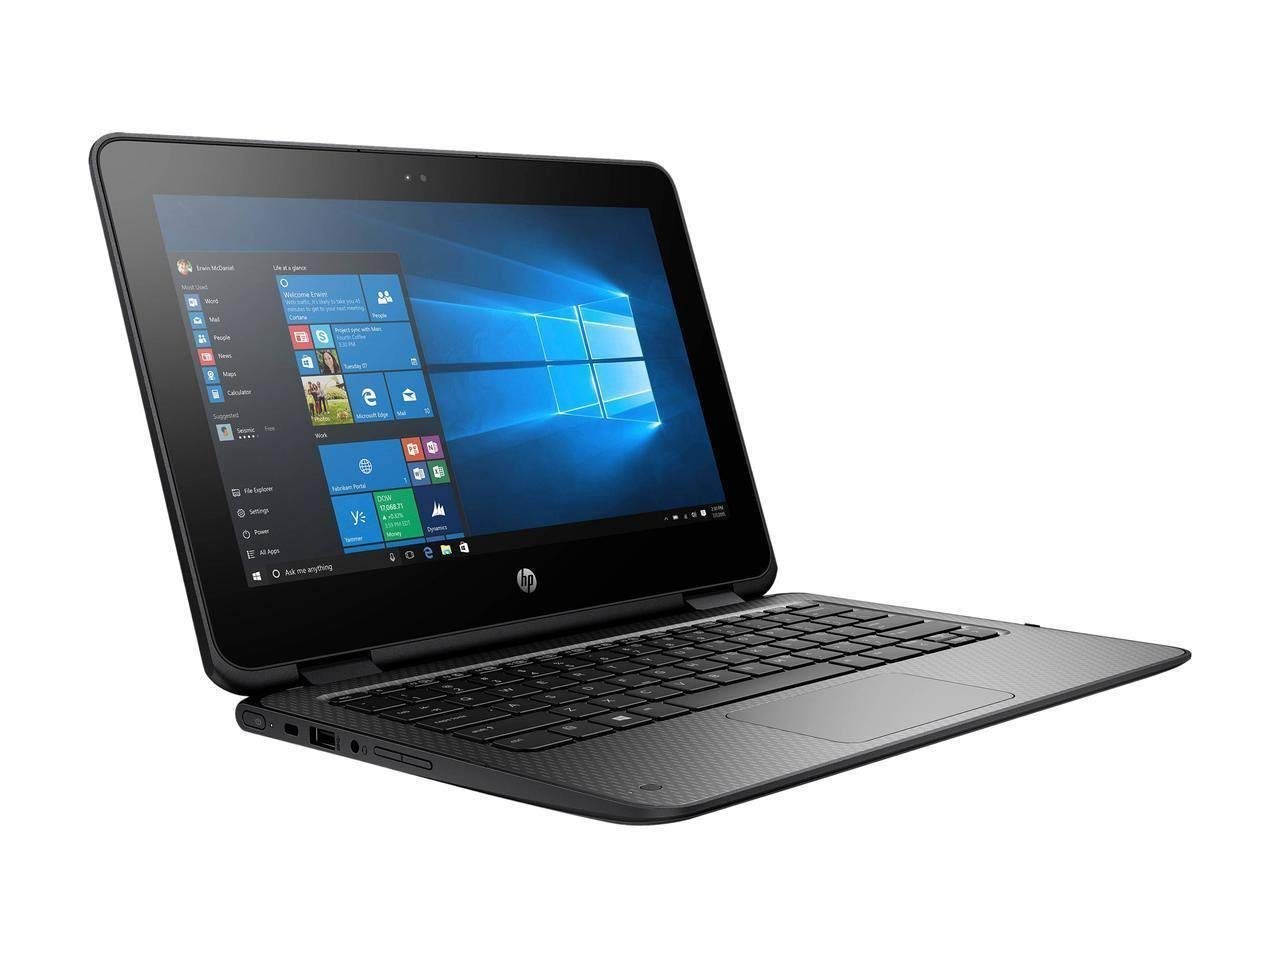 HP X360 ProBook Business 2-in-1 11.6in Touchscreen Laptop PC, Intel Celeron N3350, 4GB RAM, 64GB SSD, HDMI, Bluetooth, Webcam, WiFi, Windows 10 Pro (Renewed)